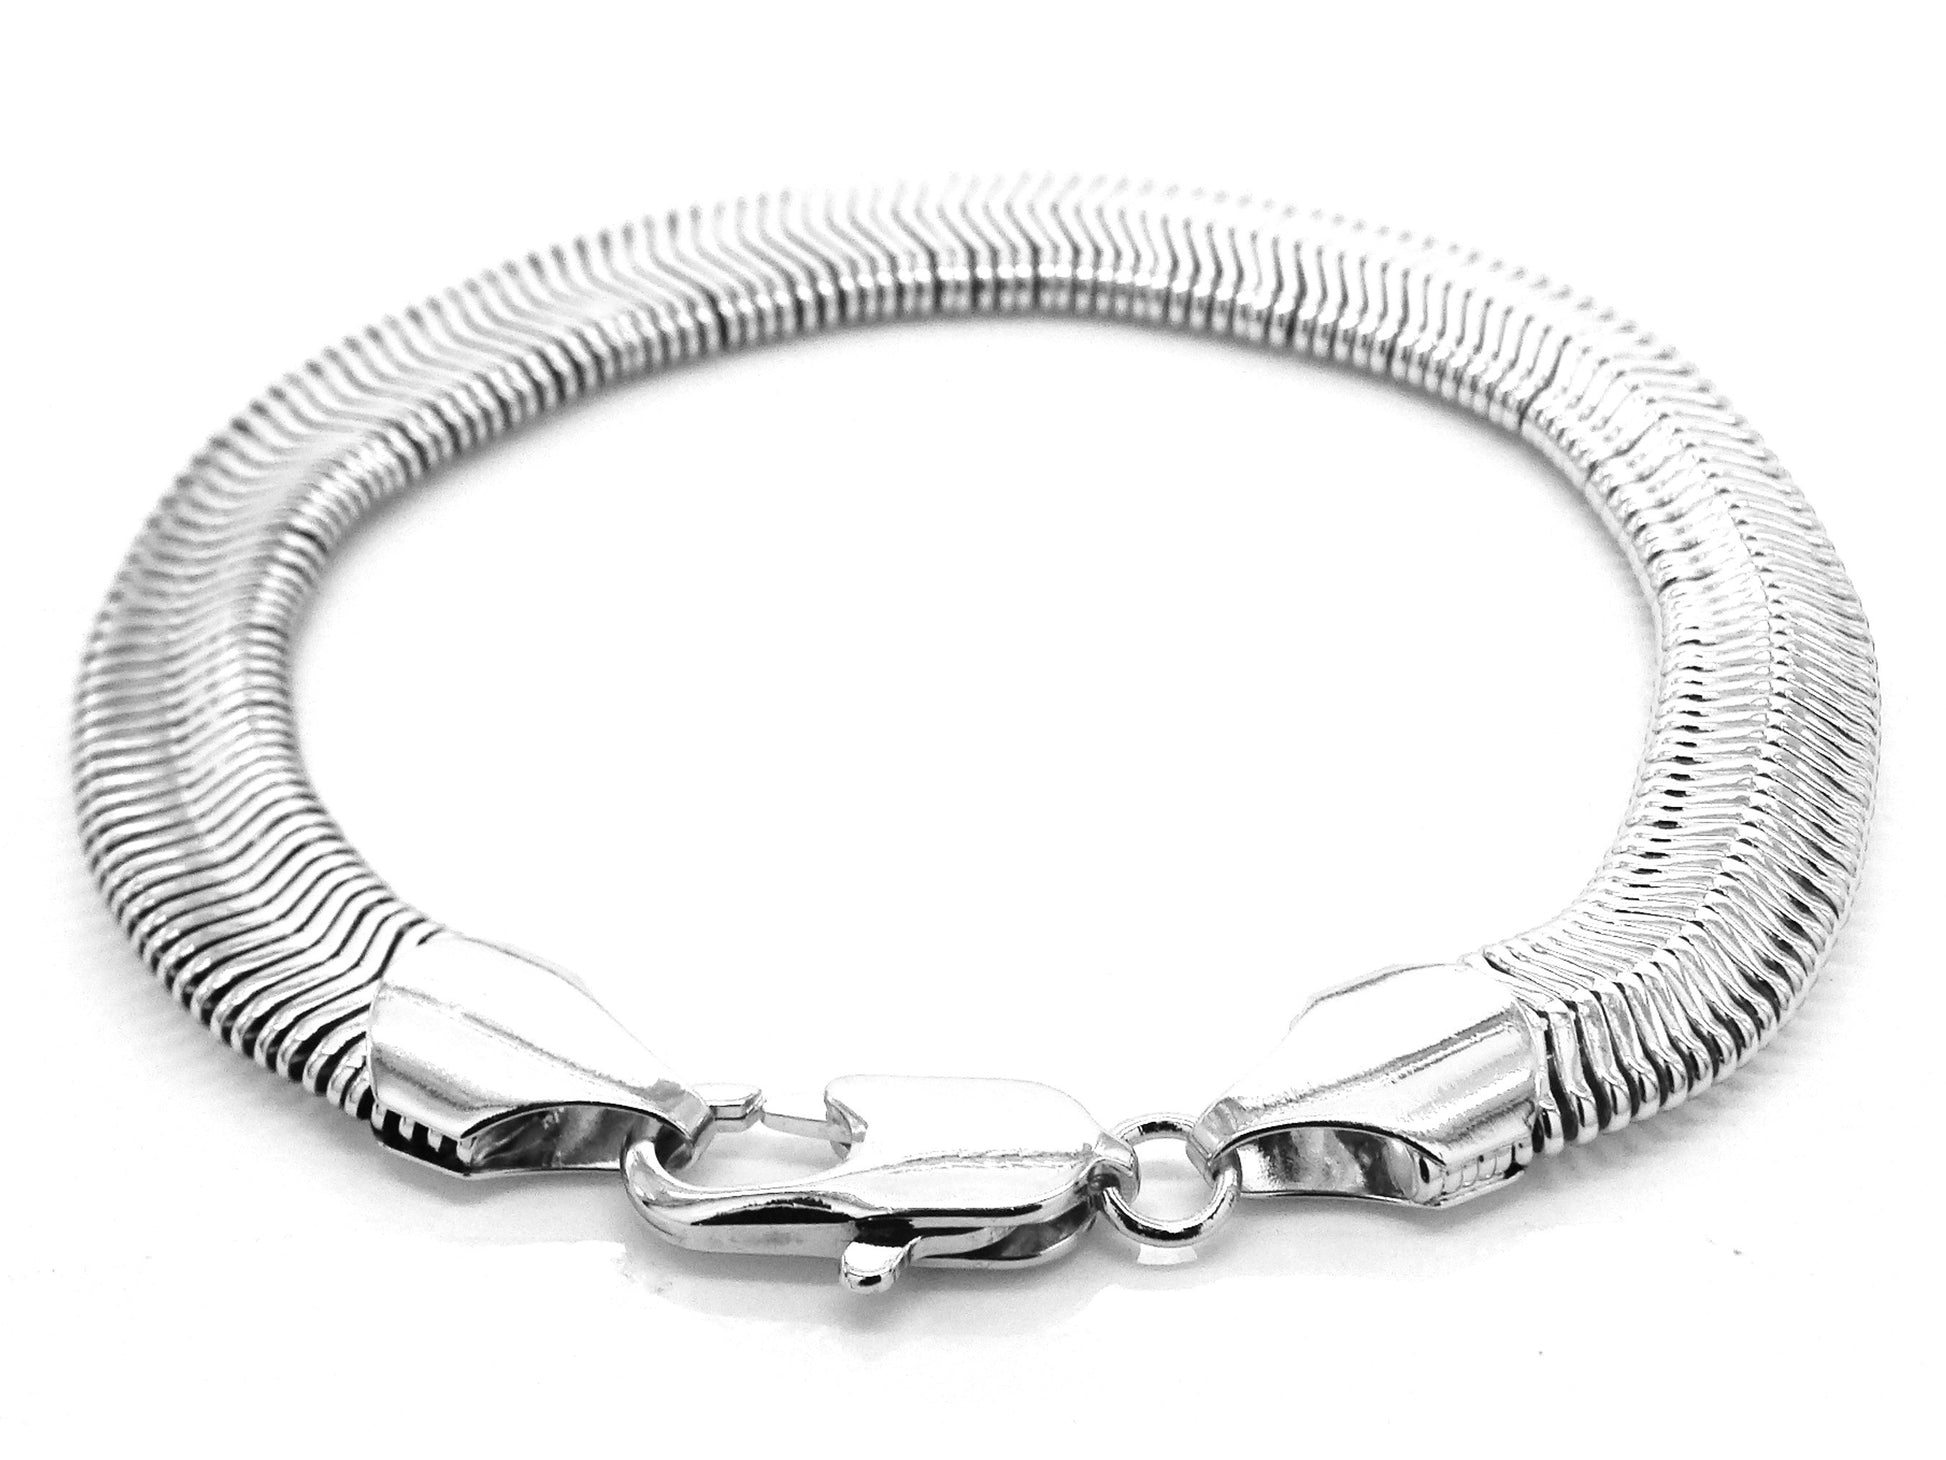 Silver snake chain bracelet